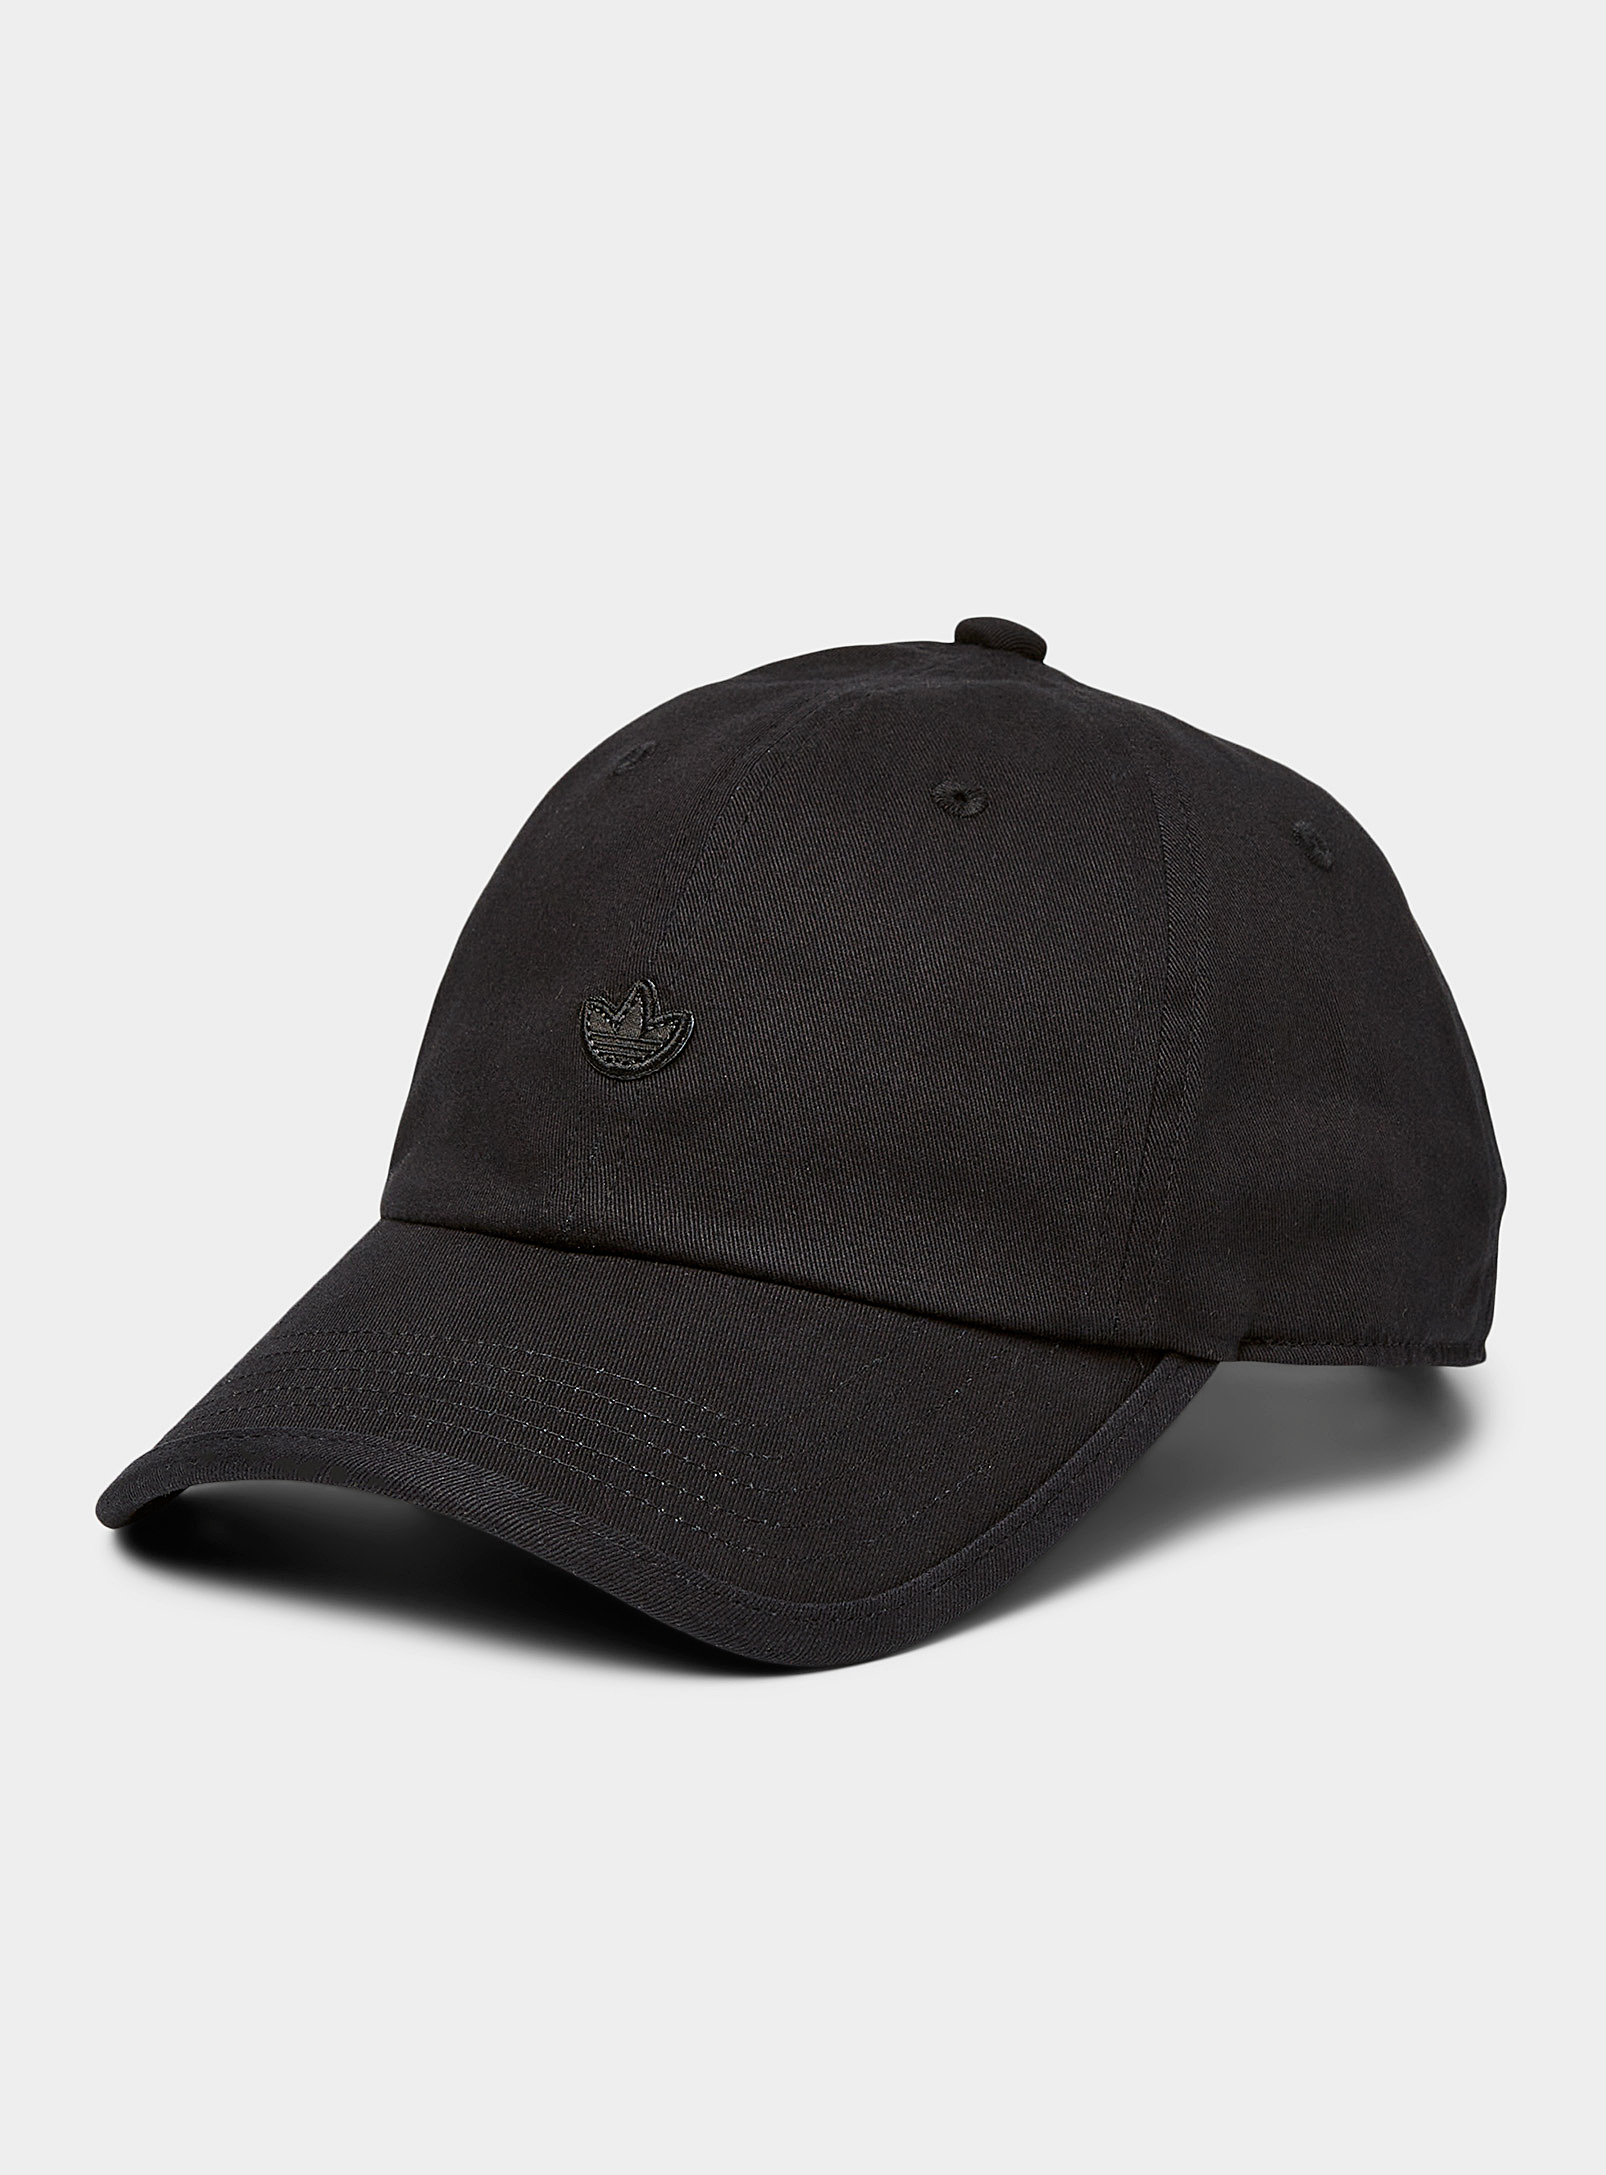 Adidas Originals - Women's Tone-on-tone logo baseball cap